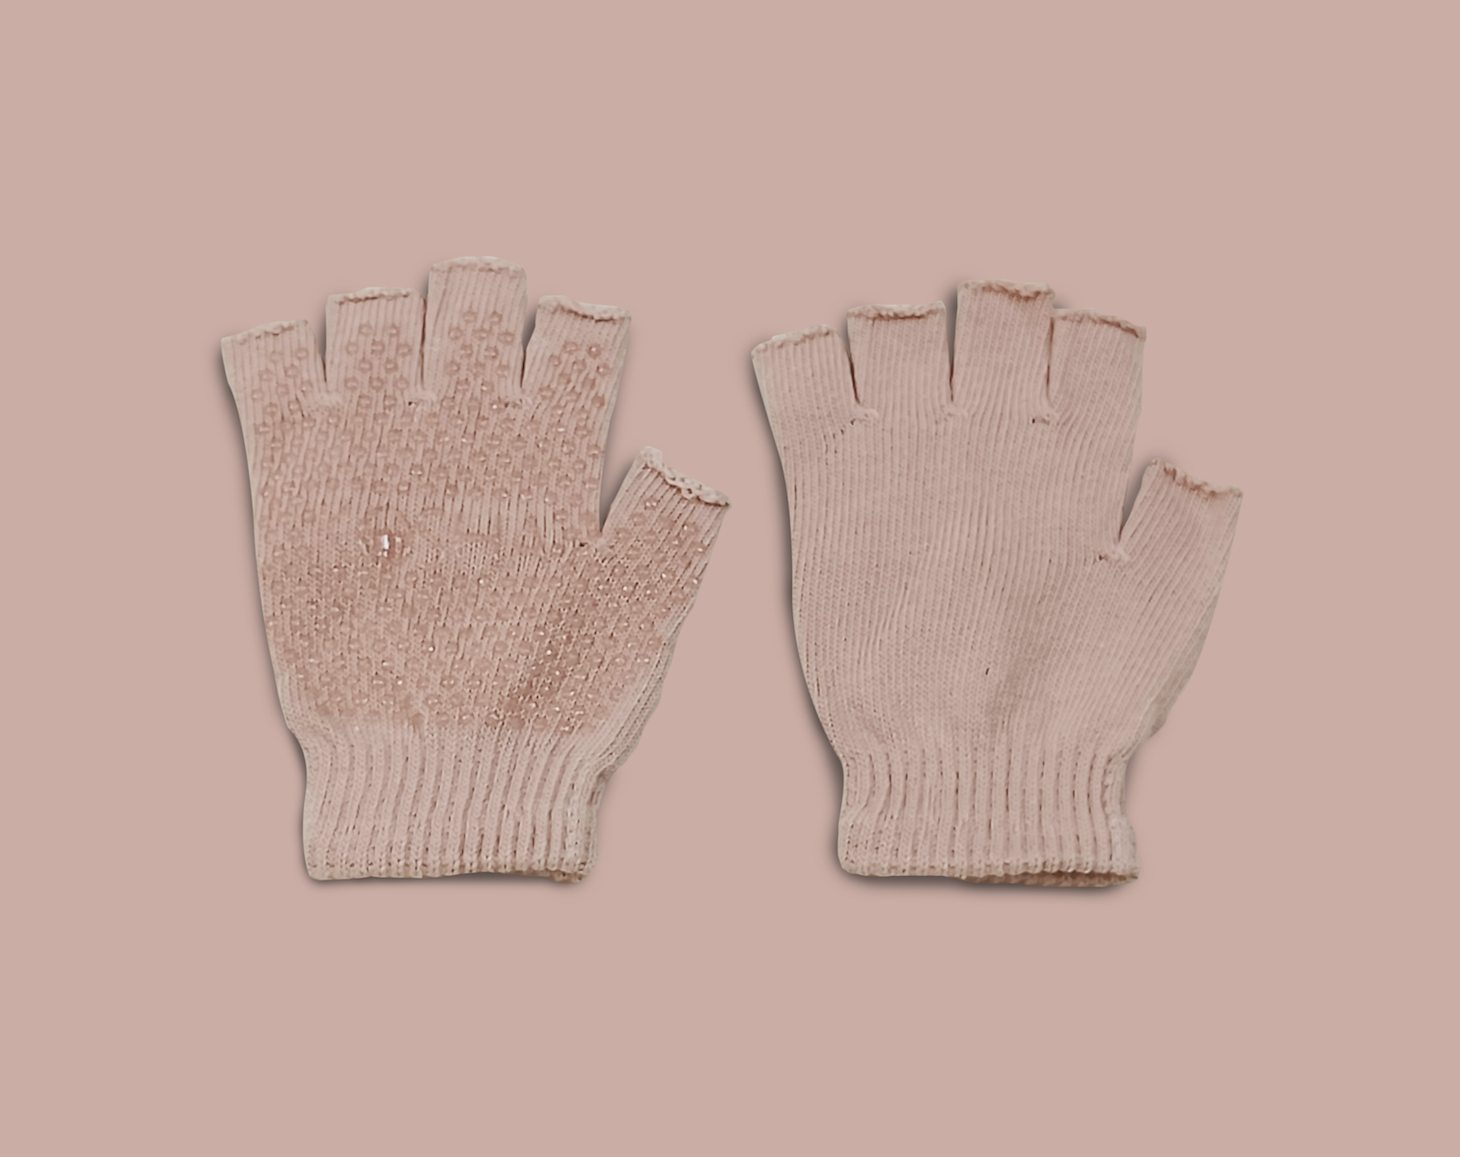  YogaPaws Unisex SkinThin Non Slip Grip Gloves for